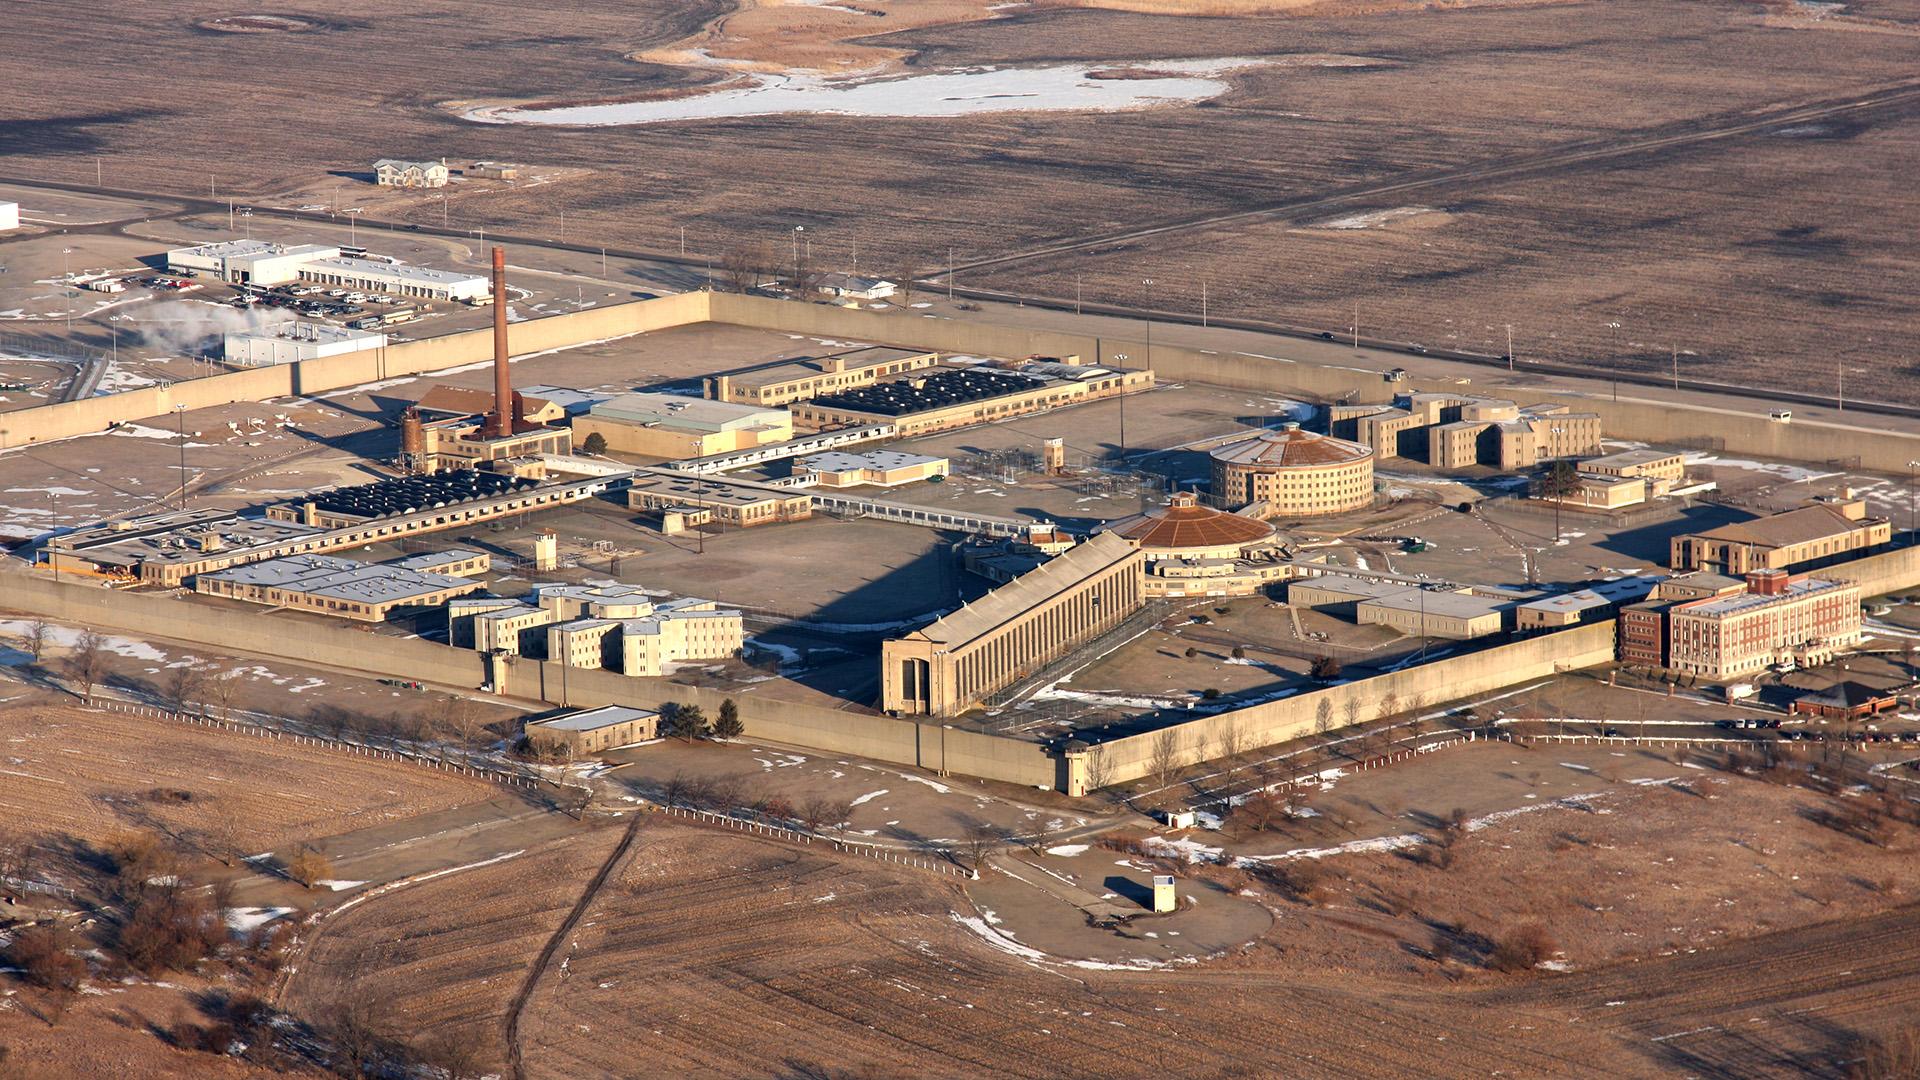 Stateville Correctional Center (Rw2 / Wikimedia Commons)